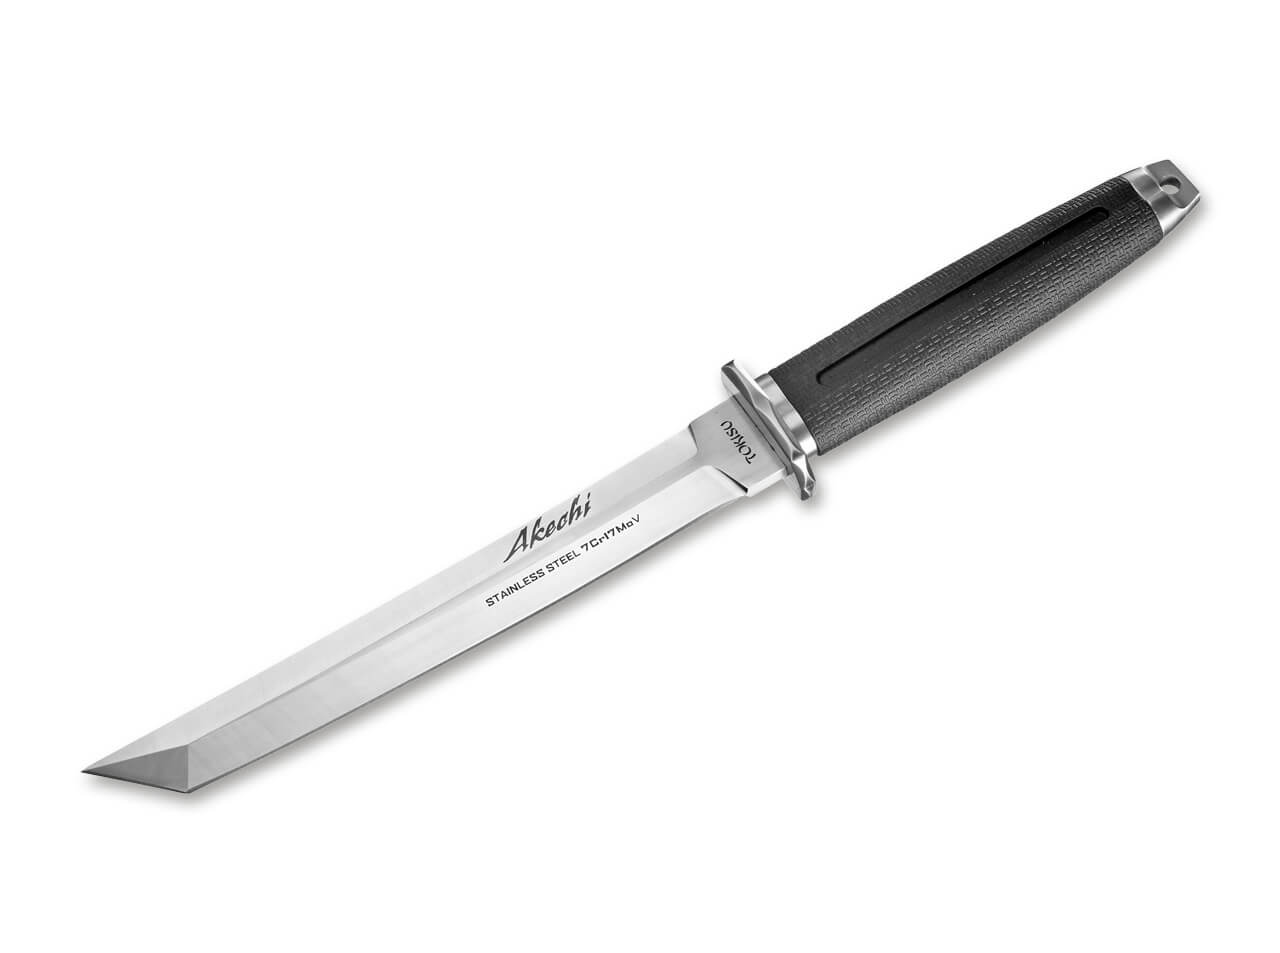 Tokisu Knives AKECHI Messer Fahrtenmesser 7Cr17MoV Stahl Rubber Handle 32382 